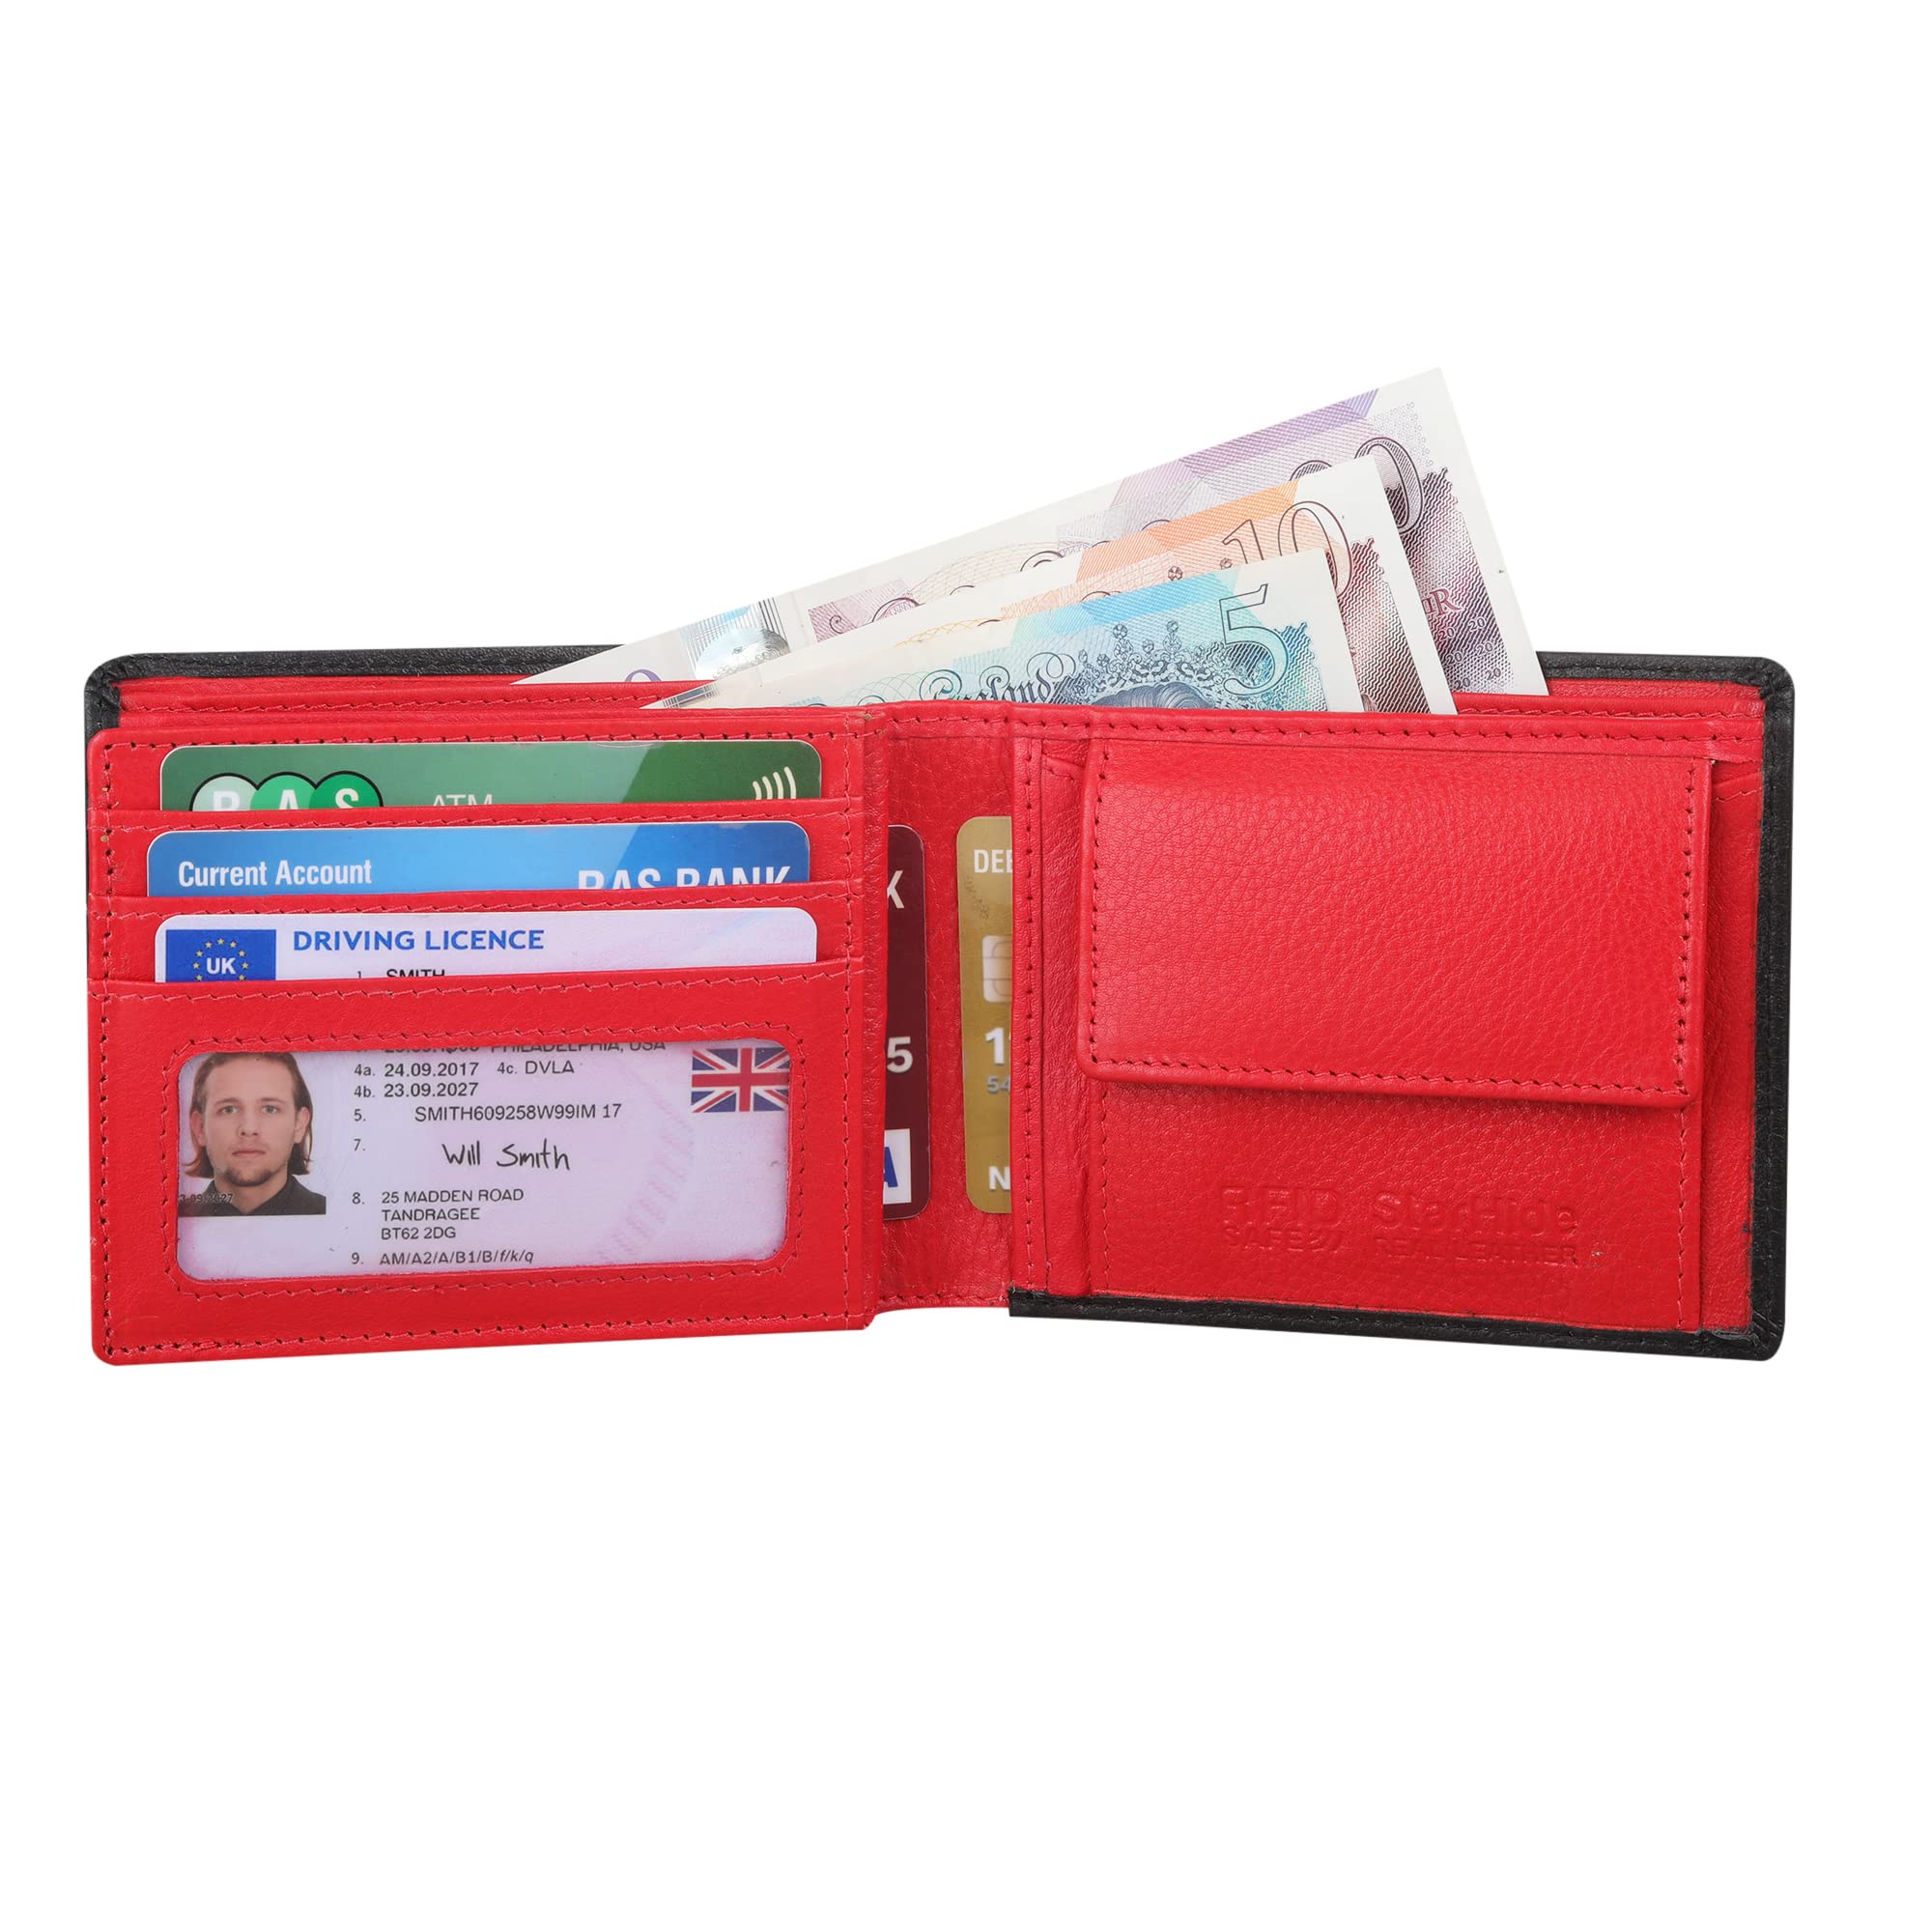 Starhide Men's RFID Blocking Genuine Nappa Leather Billfold Wallet Purse - Photo Id Holder - Coin Pocket Pouch 1216 (Black/Red)